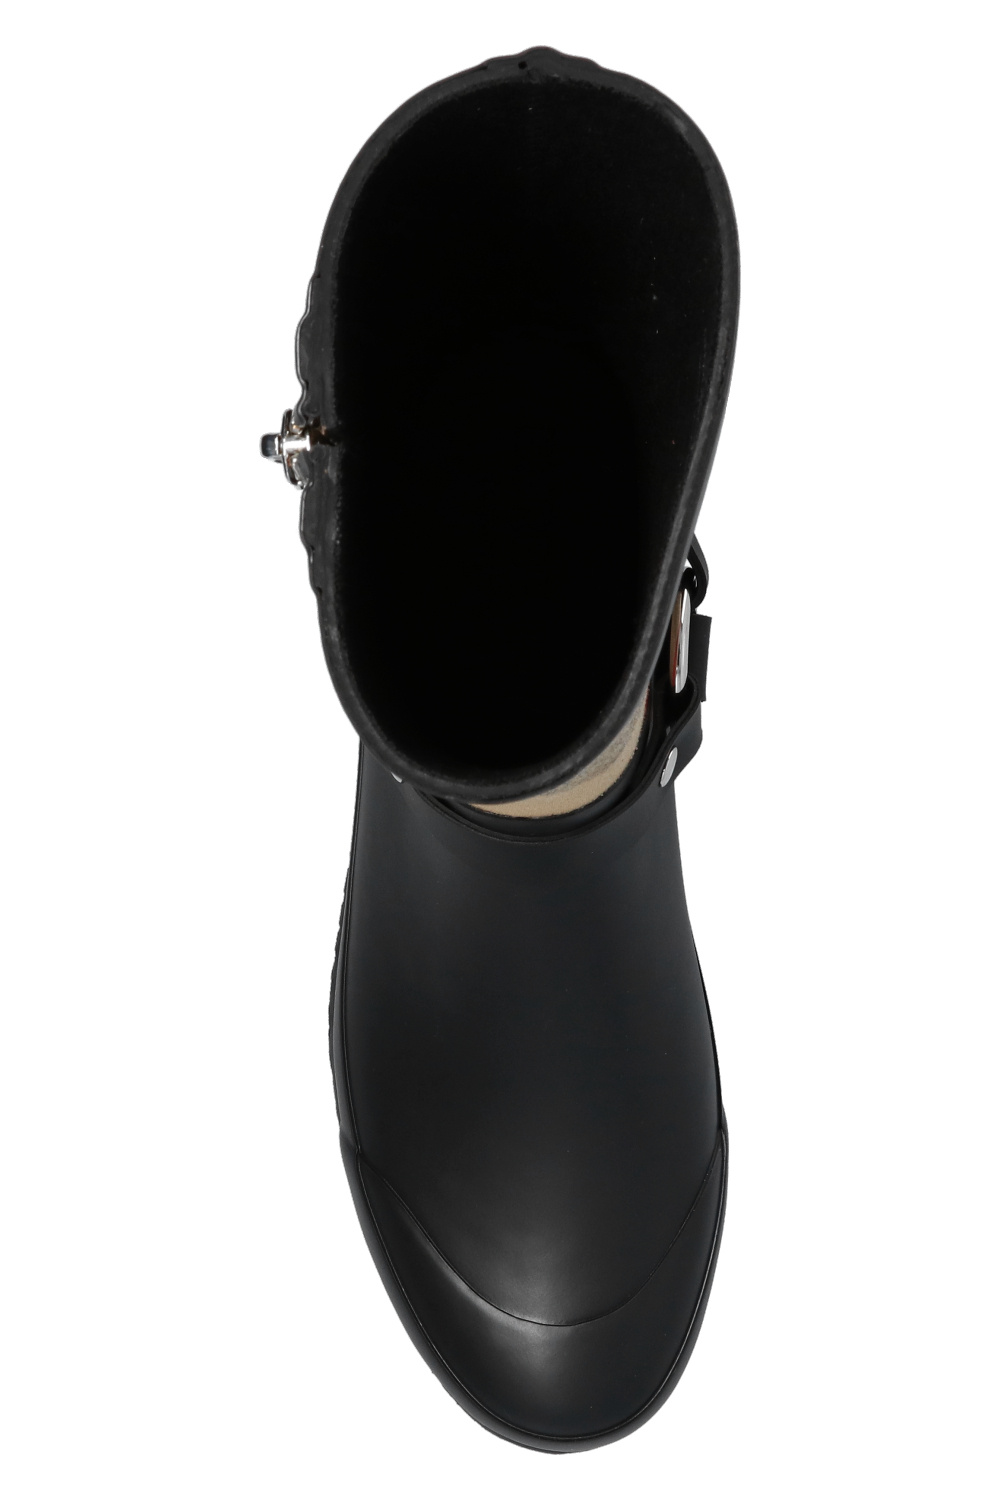 Burberry ‘House Check’ rain boots